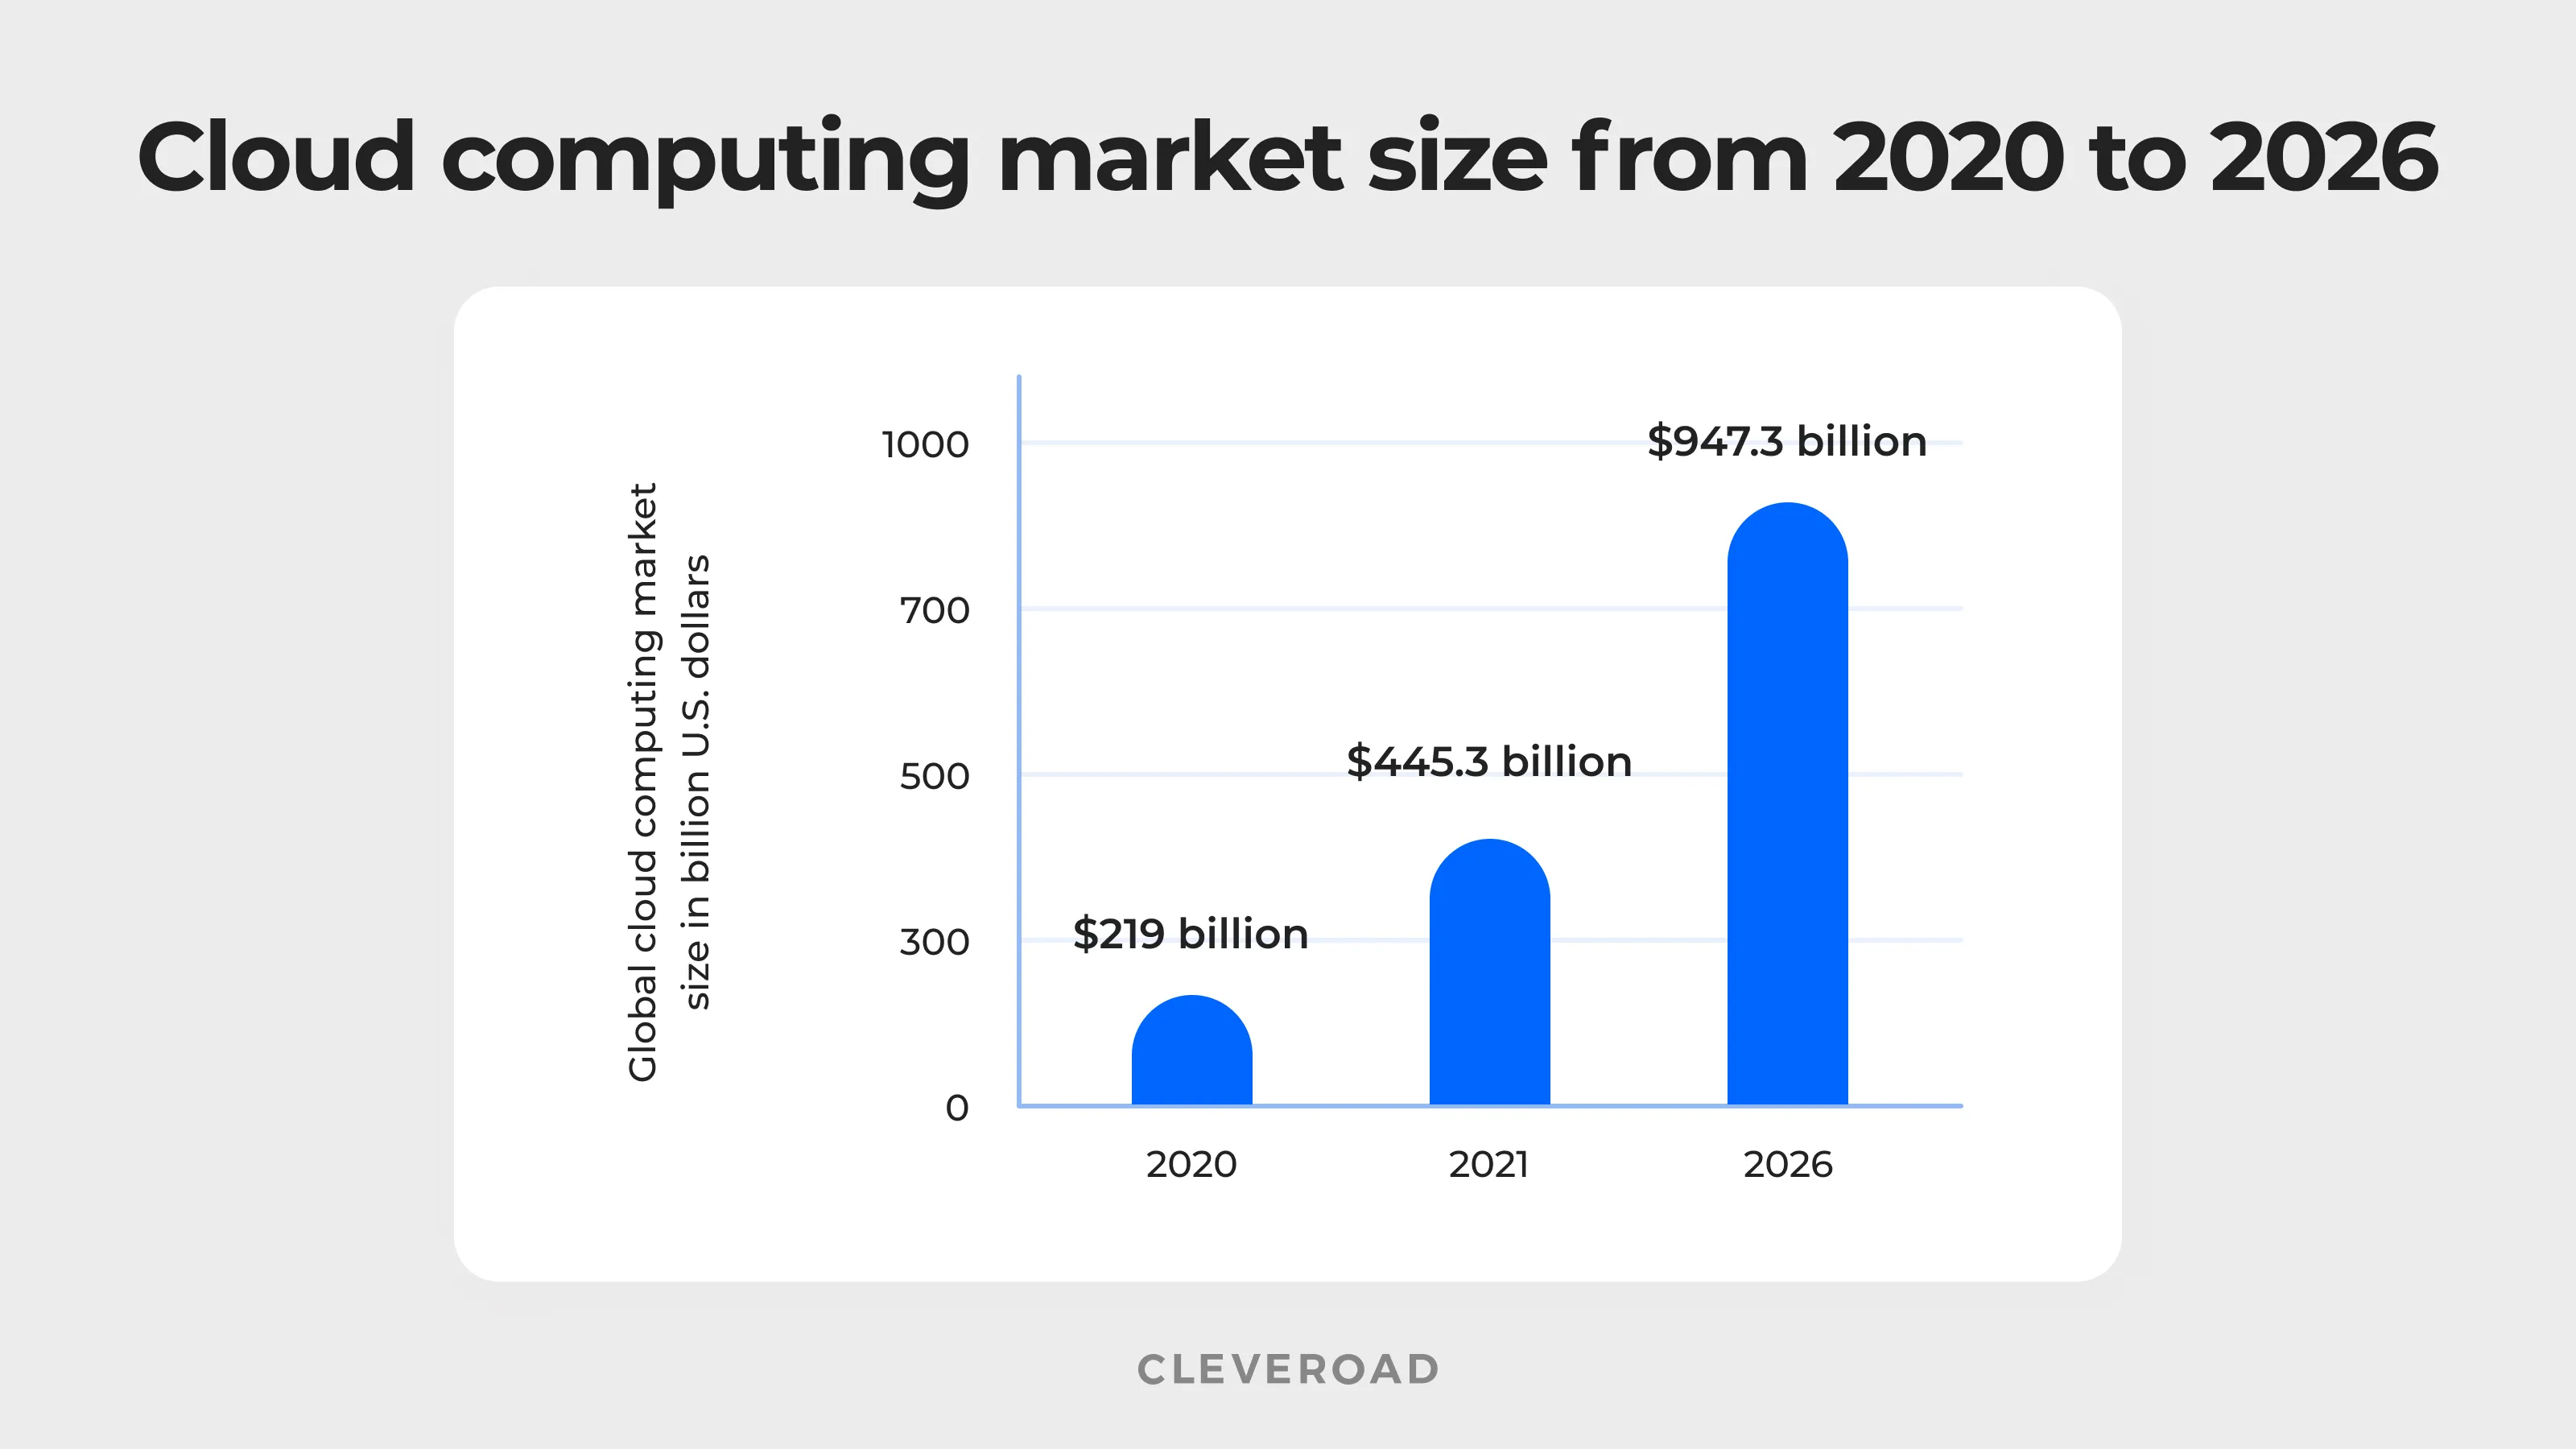 Global cloud computing market growth